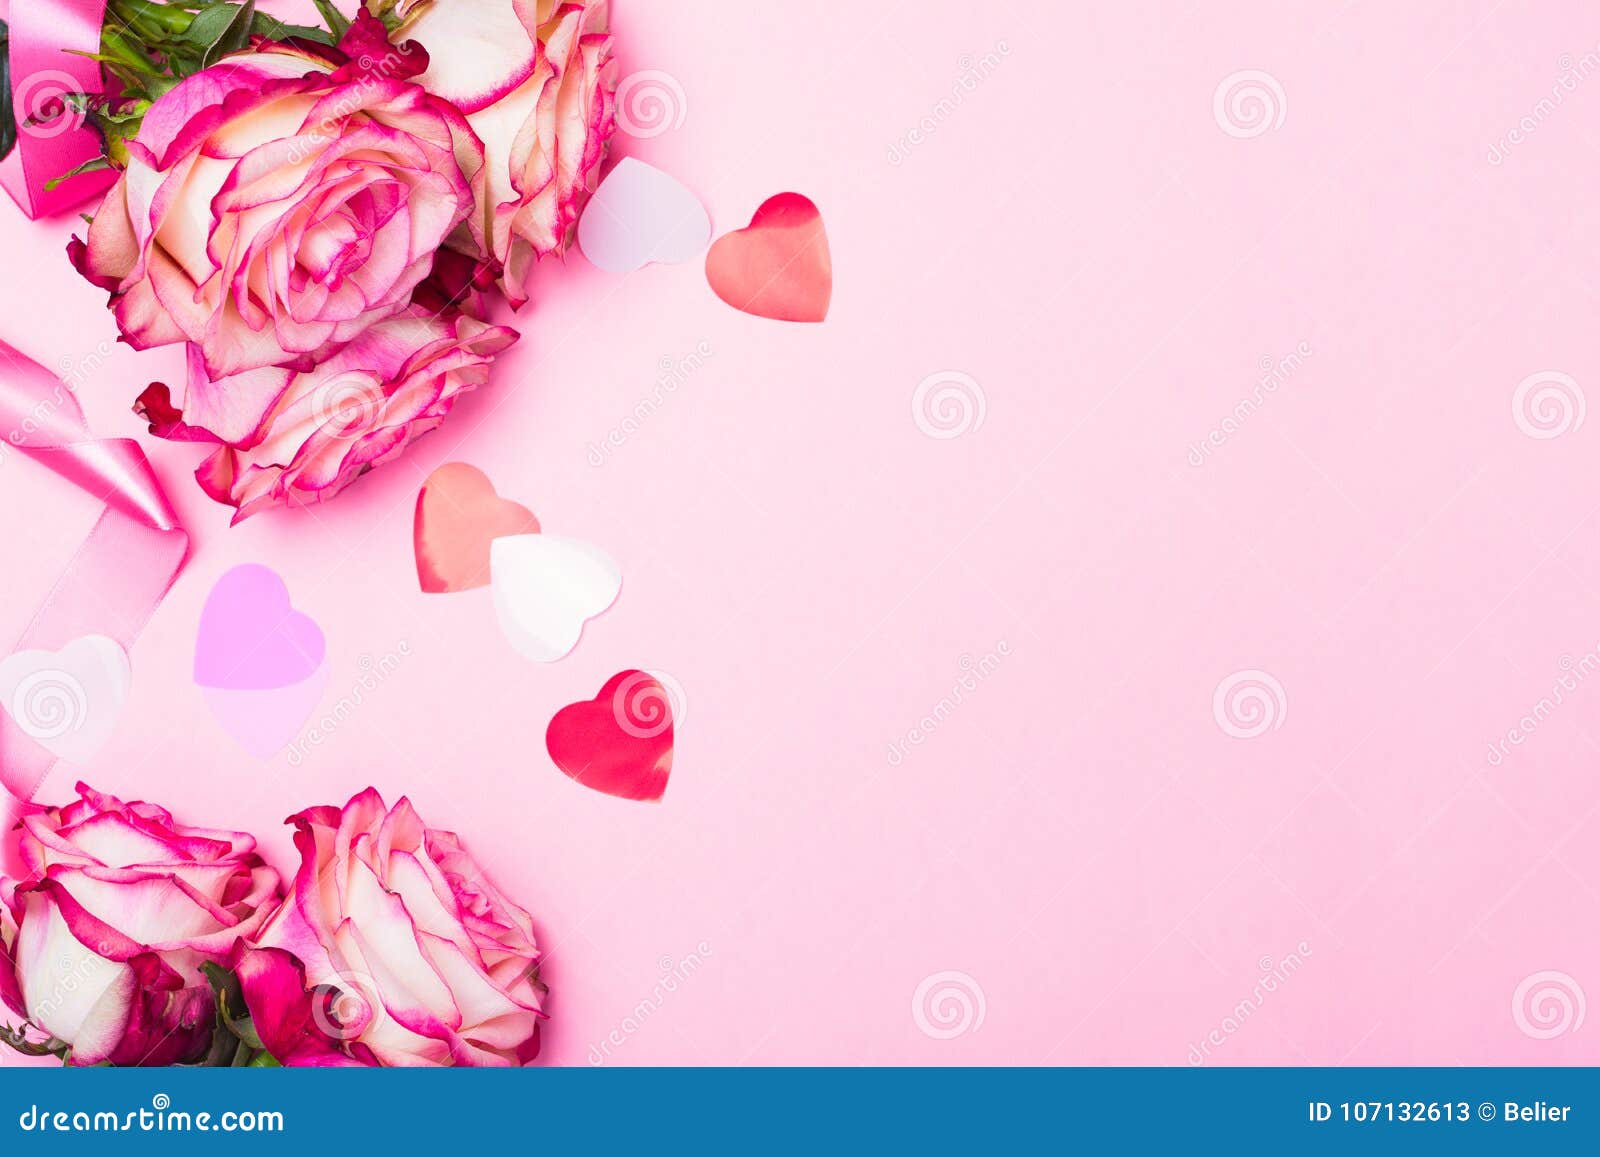 Beautiful Pink Rose, Decorative Confetti Hearts and Pink Ribbon on Pink ...